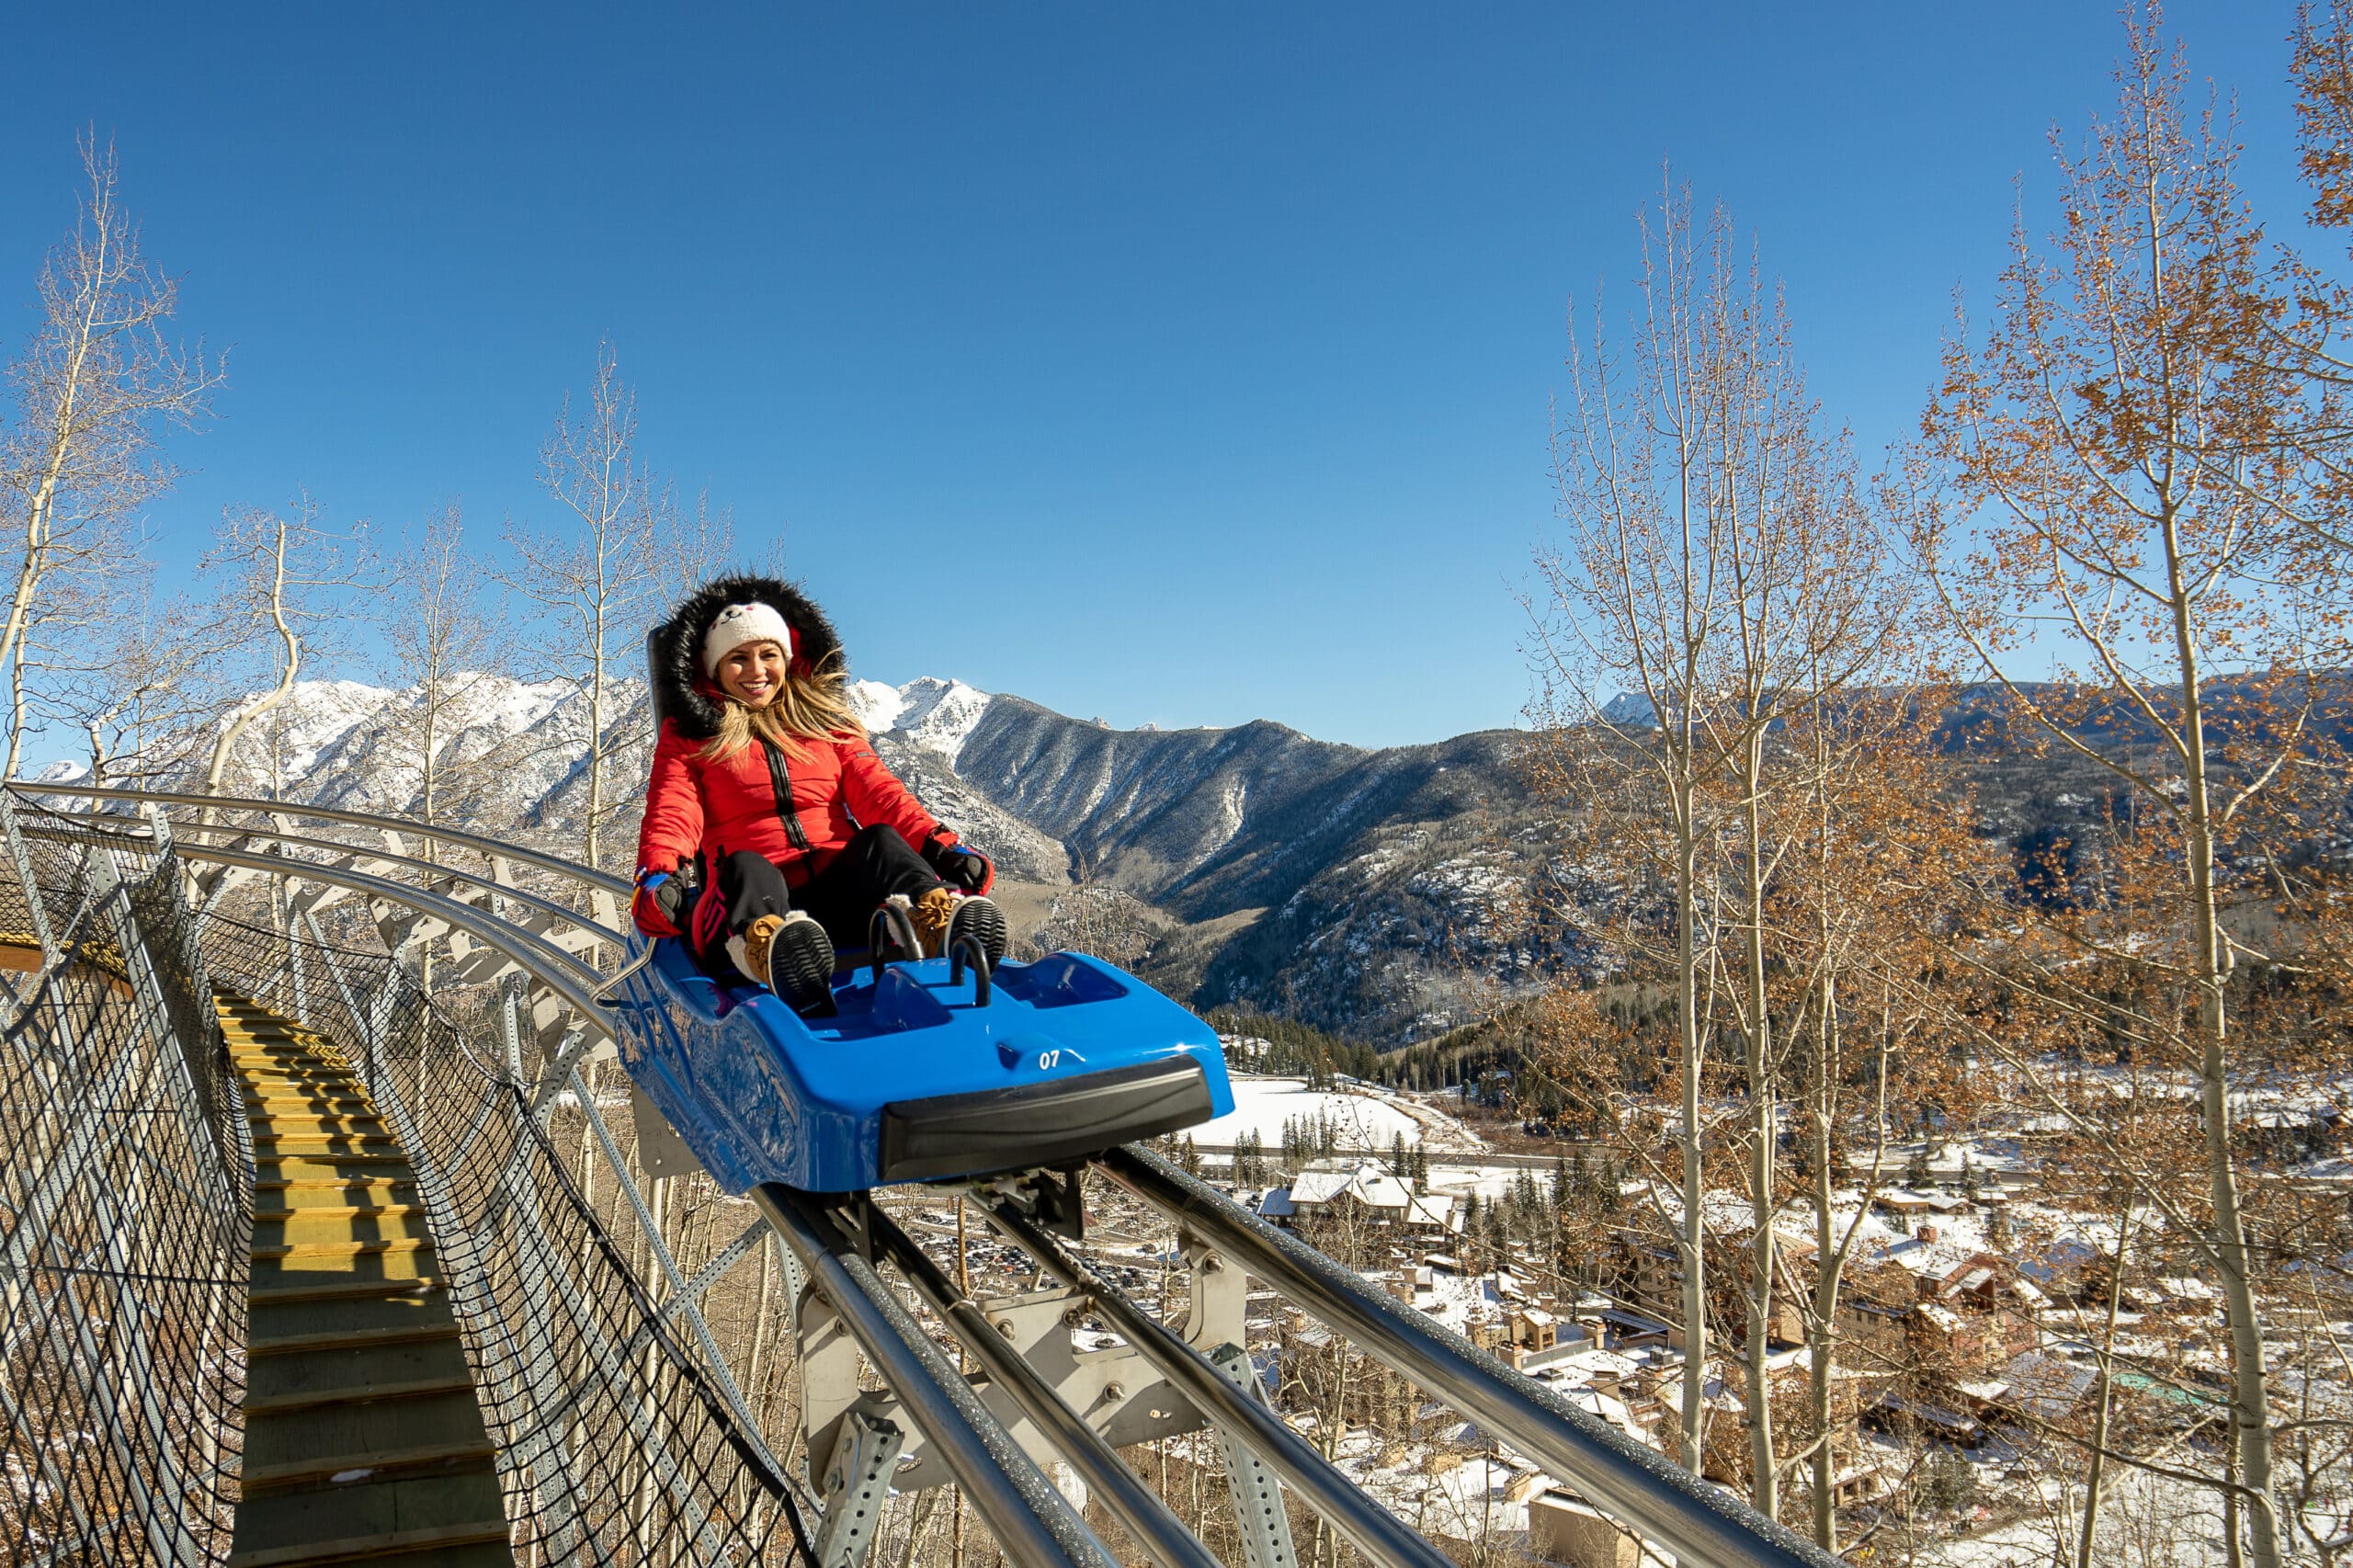 Female enjoys the crisp alpine air while riding the Inferno Mountain Coaster